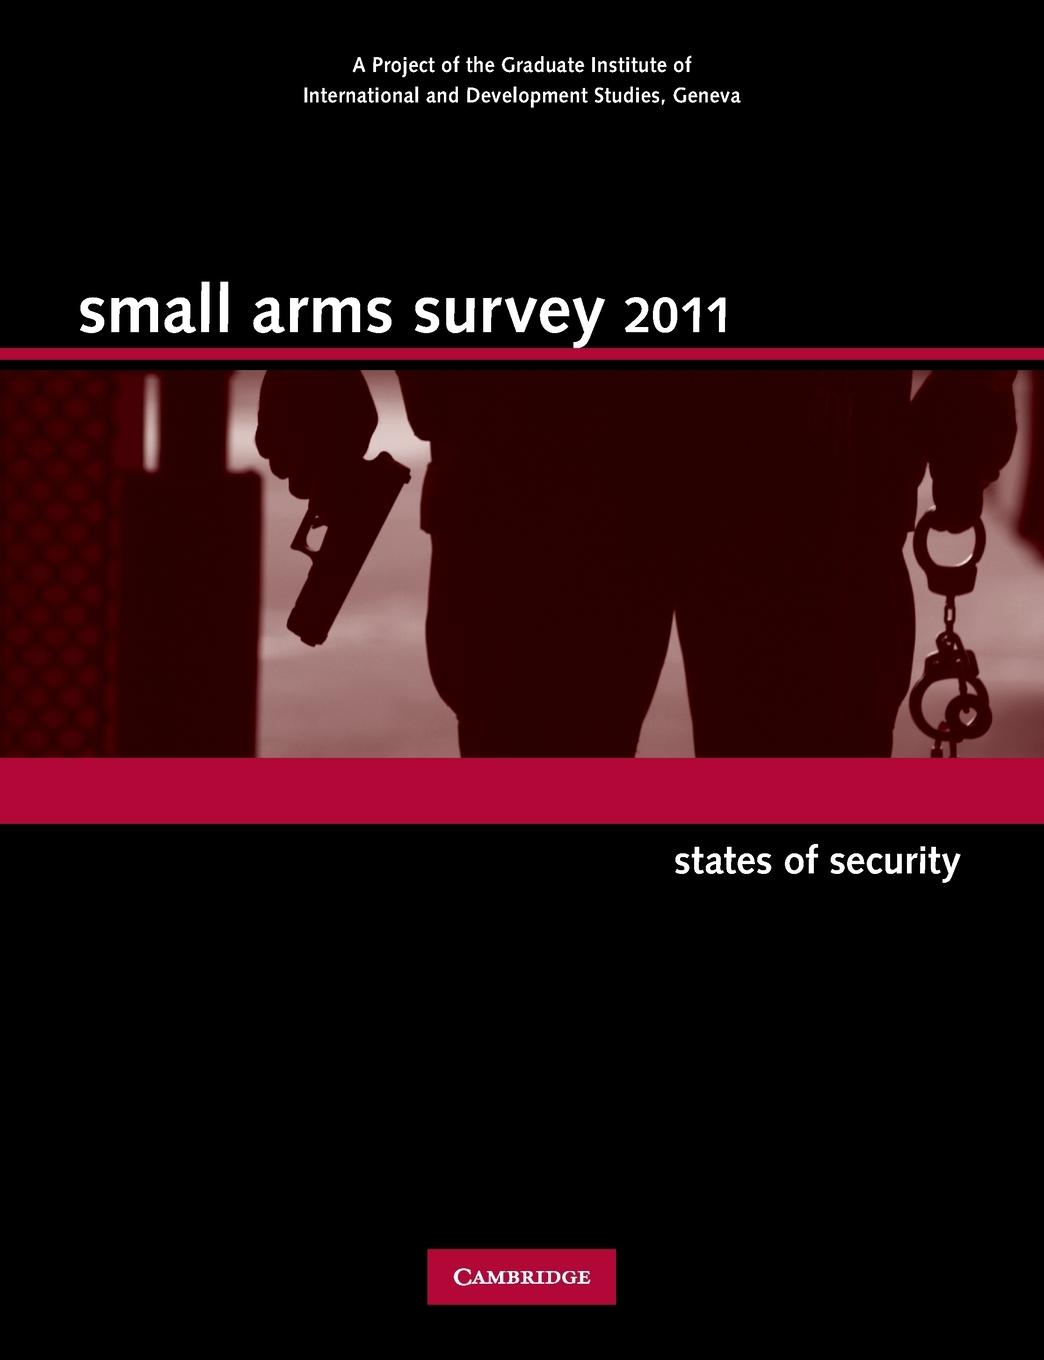 Small Arms Survey: States of Security - Small Arms Survey Geneva